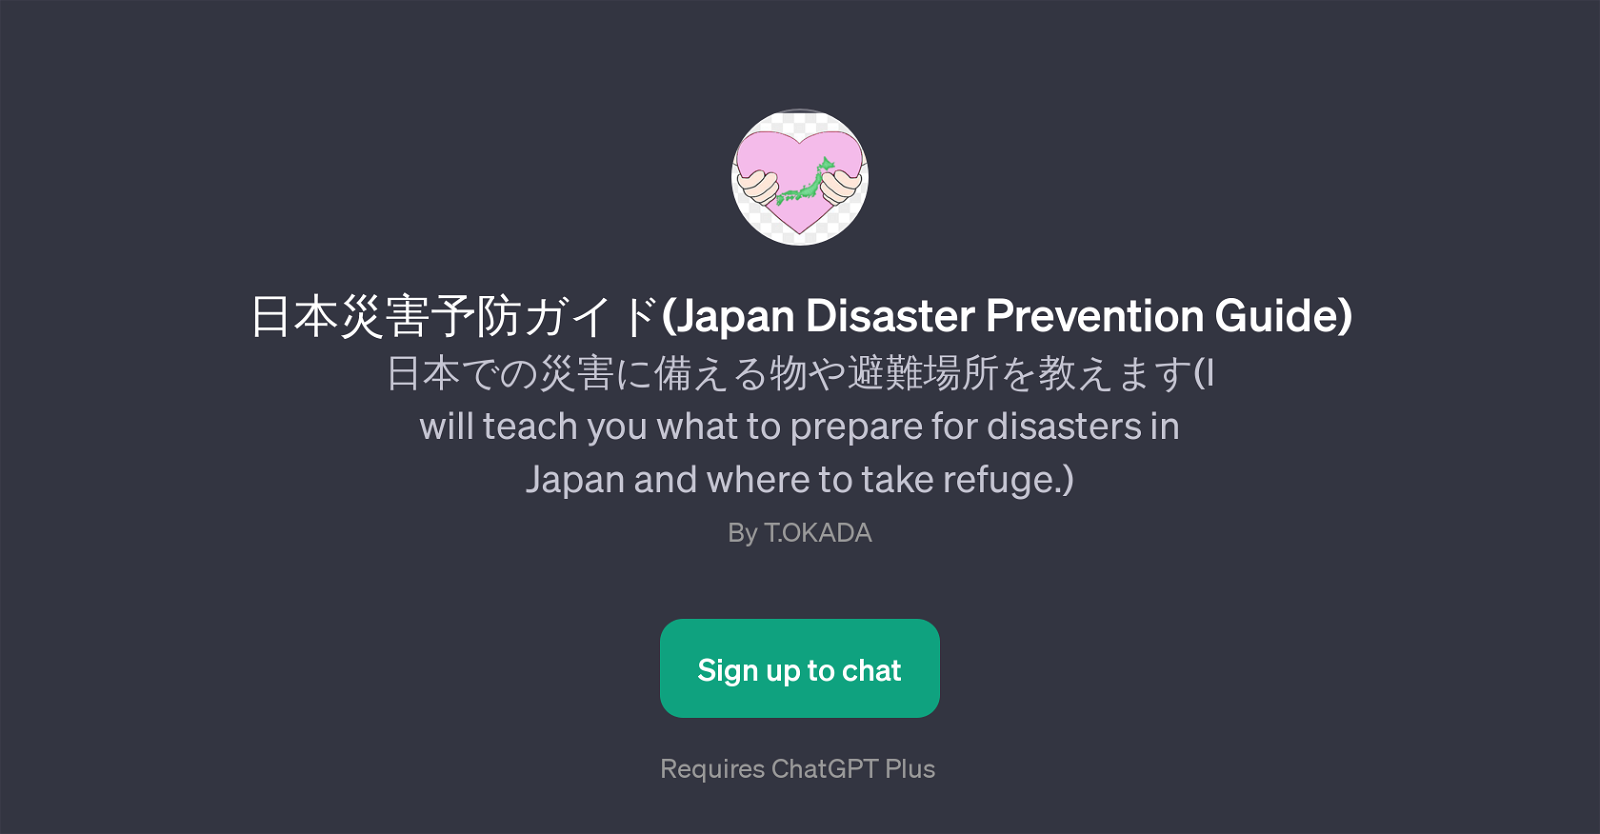 Japan Disaster Prevention Guide website